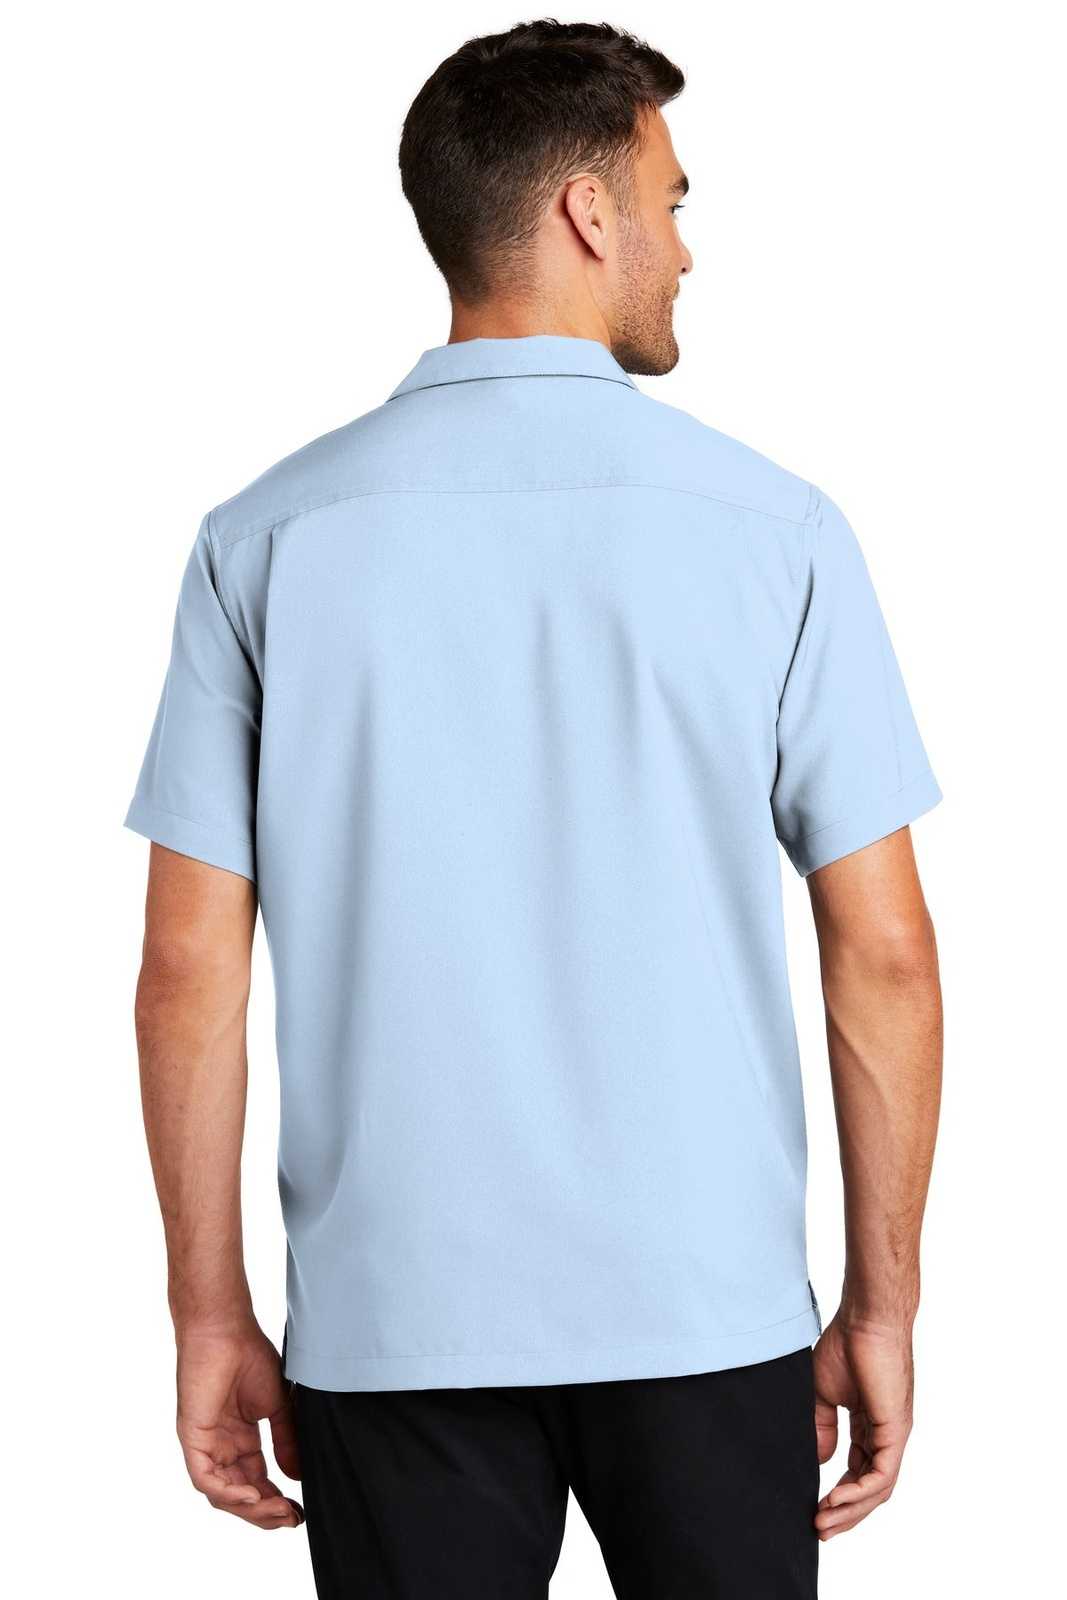 Port Authority W400 Short Sleeve Performance Staff Shirt - Cloud Blue - HIT a Double - 1